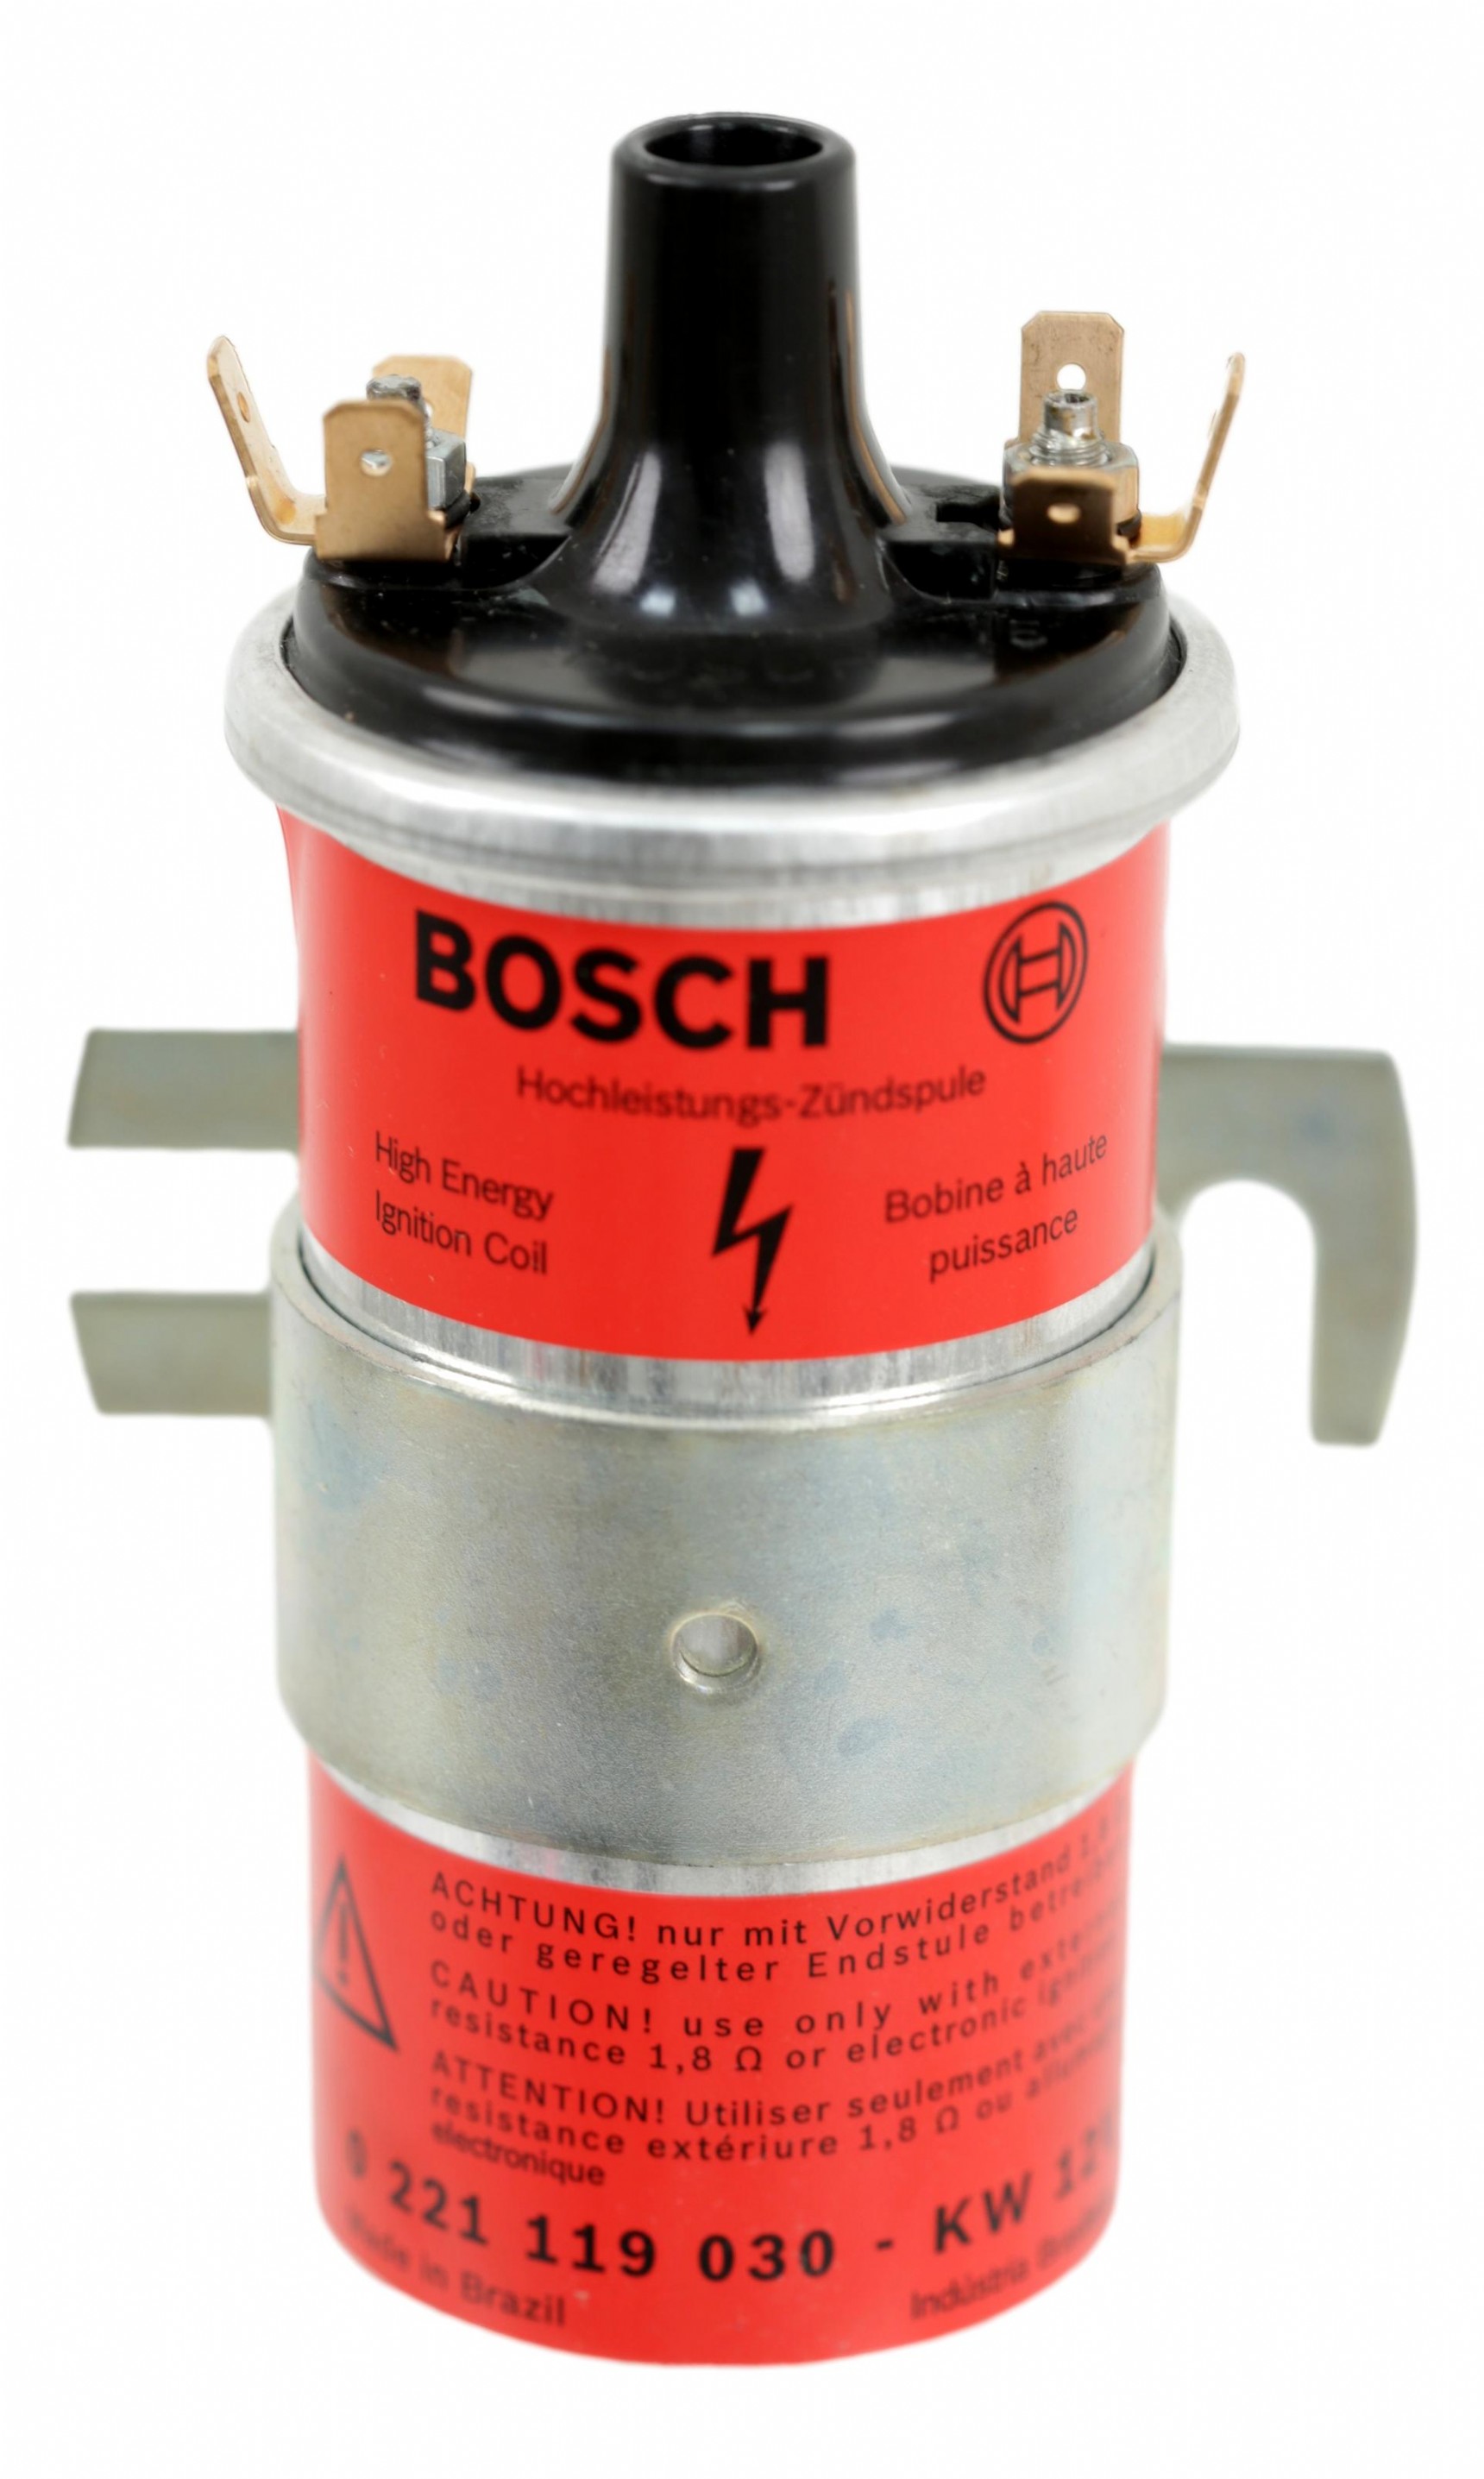 Bosch Ignition coil. 12 Volt 0221119030 - Histoparts